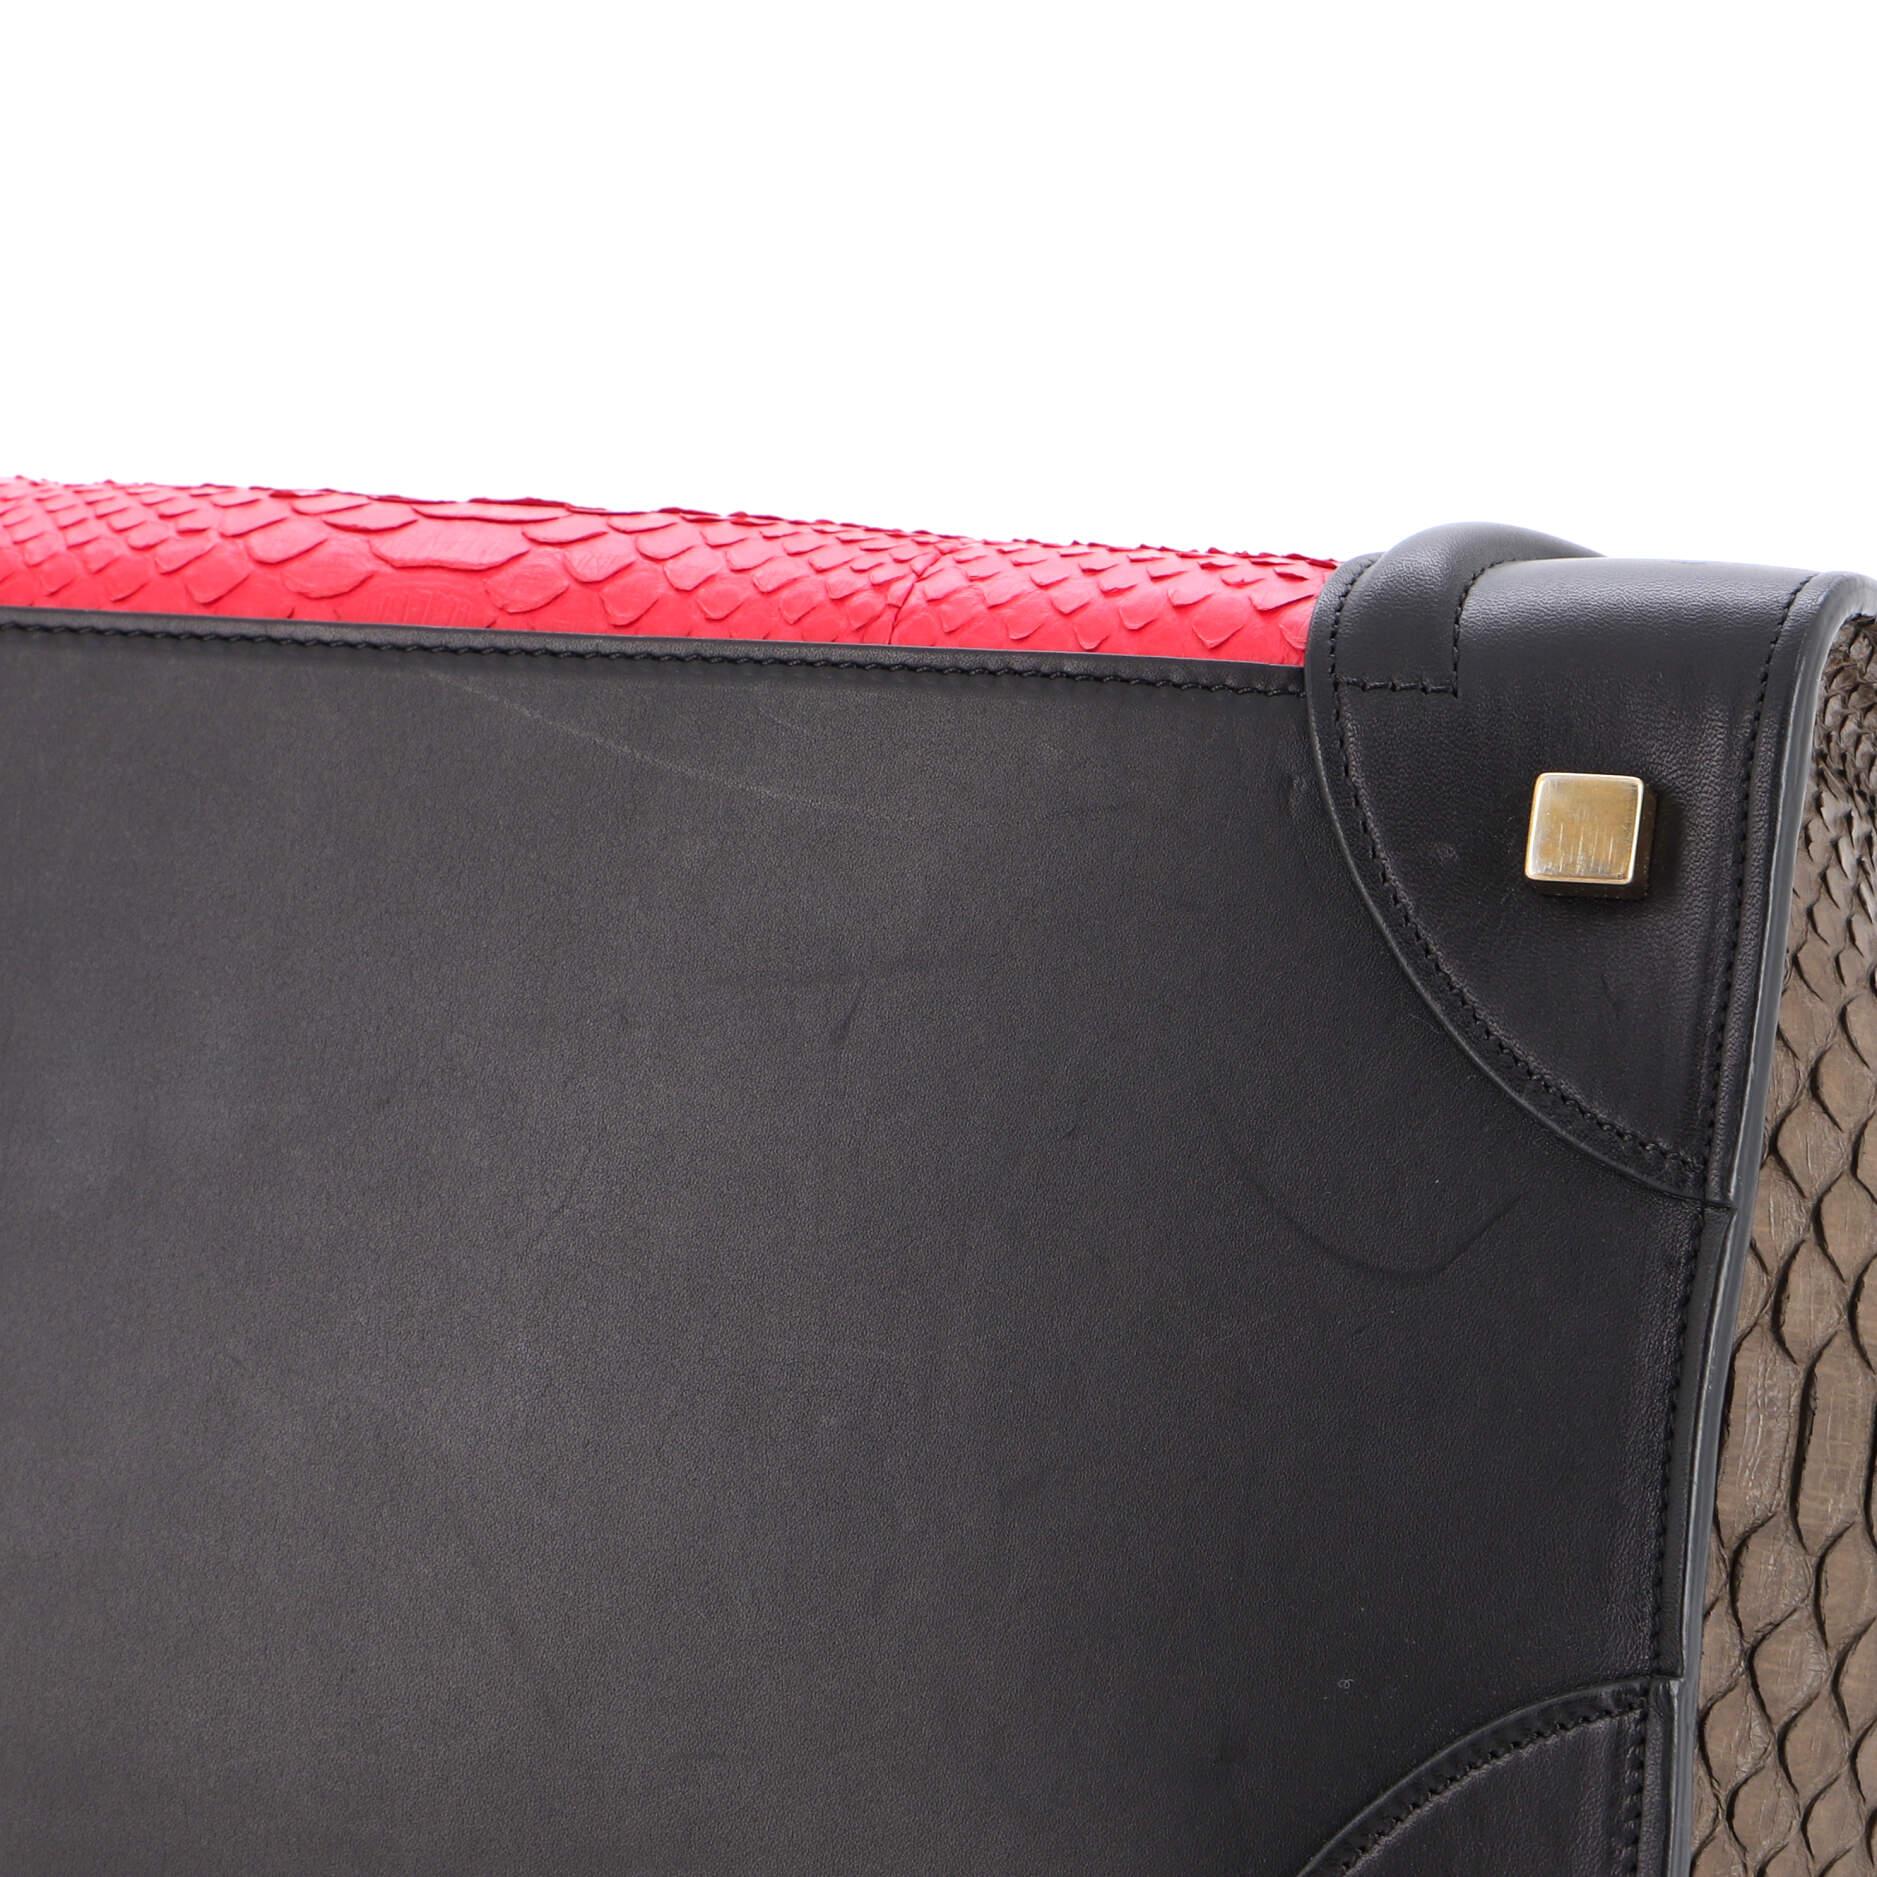 Celine Luggage Bag Python and Leather Mini For Sale 2